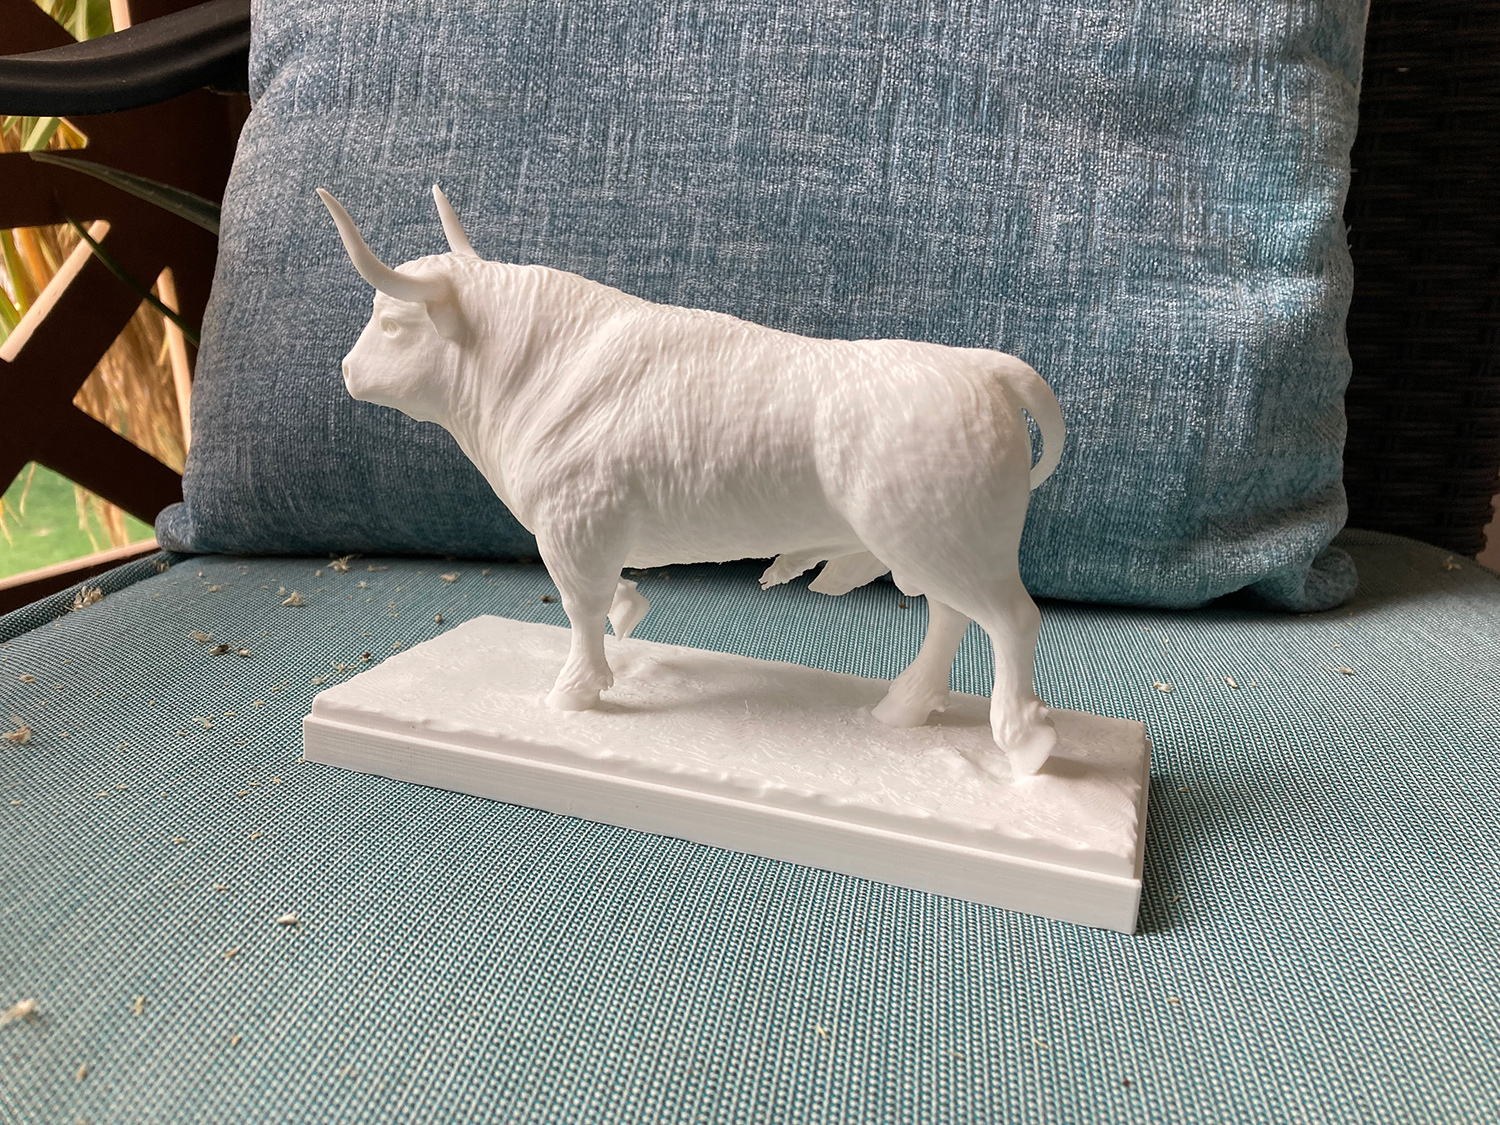 3D Printed Bull Statuette. 3D printing on demand.